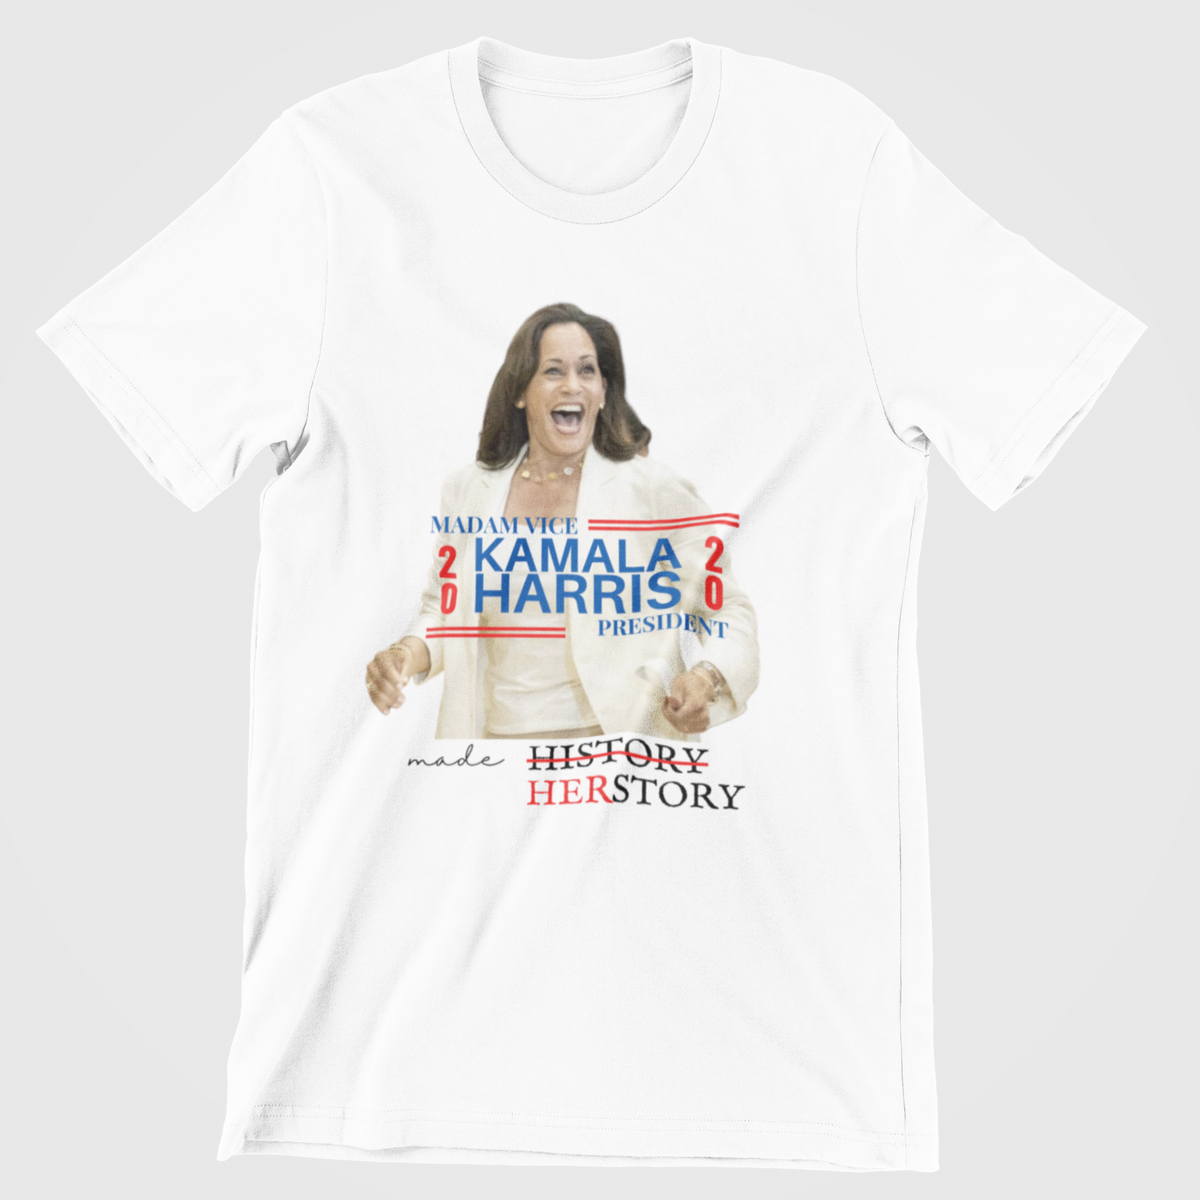 Madam Kamala T-shirt changed SensibleTees – to HIStory HERstory Harris